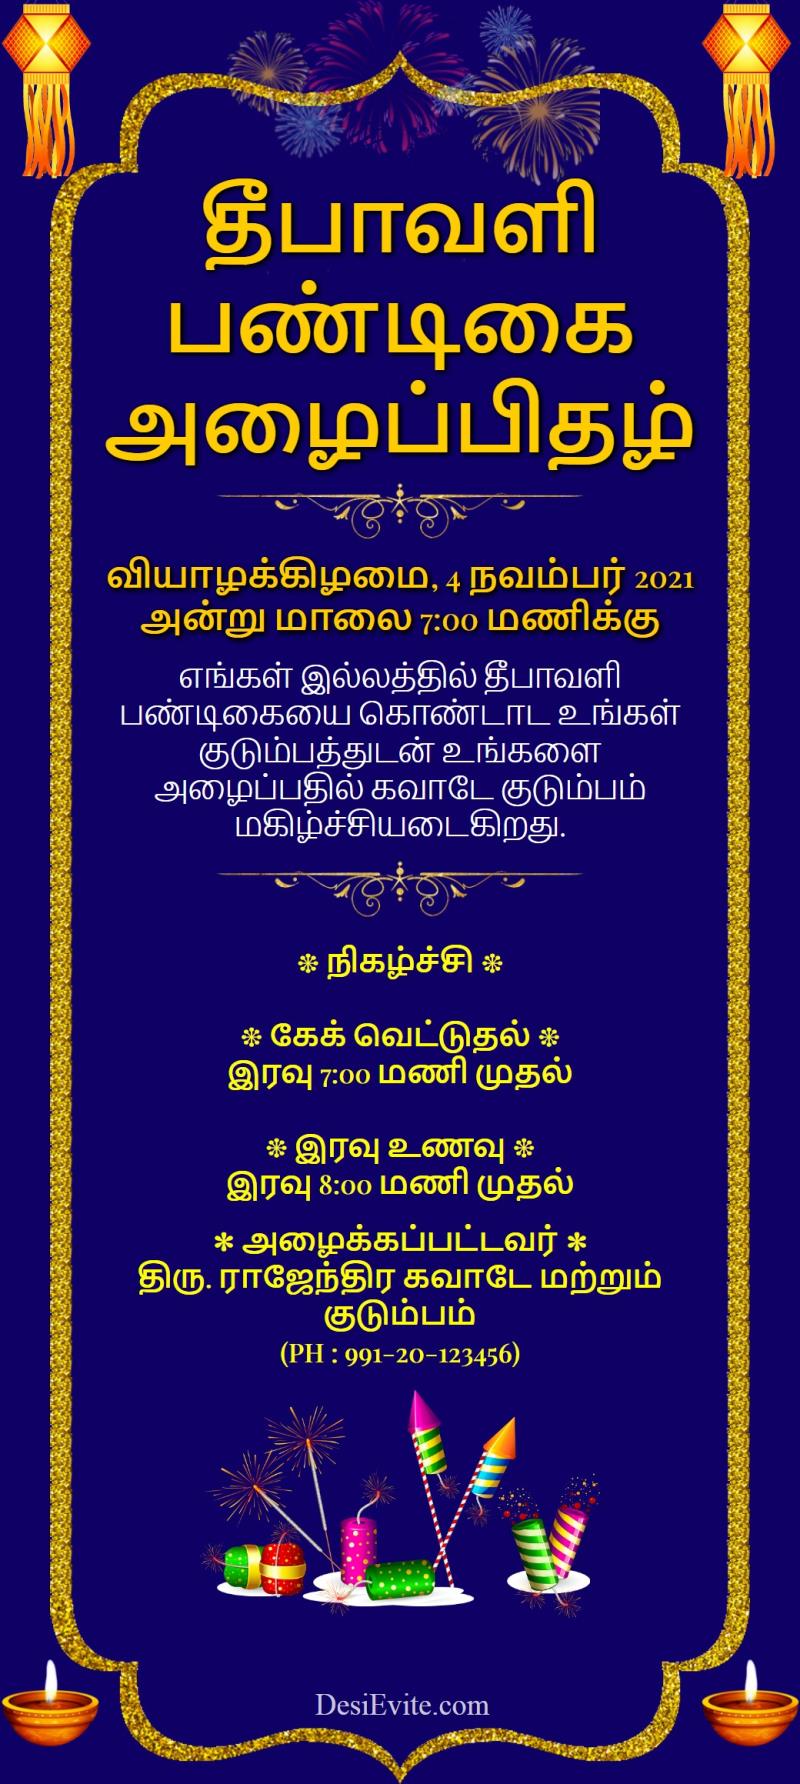 Tamil dipawali invitation ecard template 114